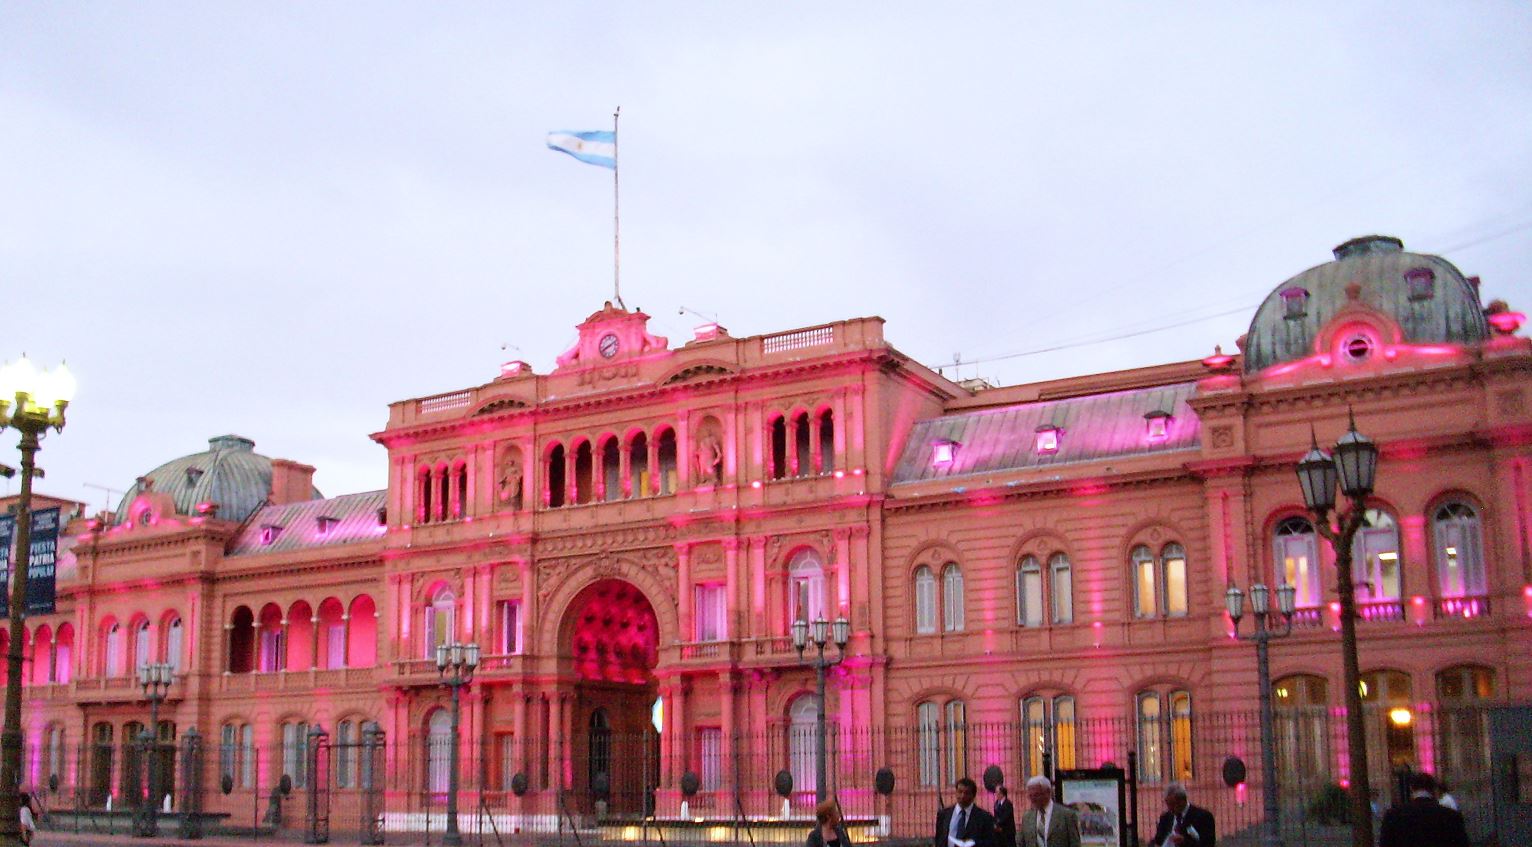 Argentina's presidential palace, La Cas Rosada. (Photo Internet reproduction)